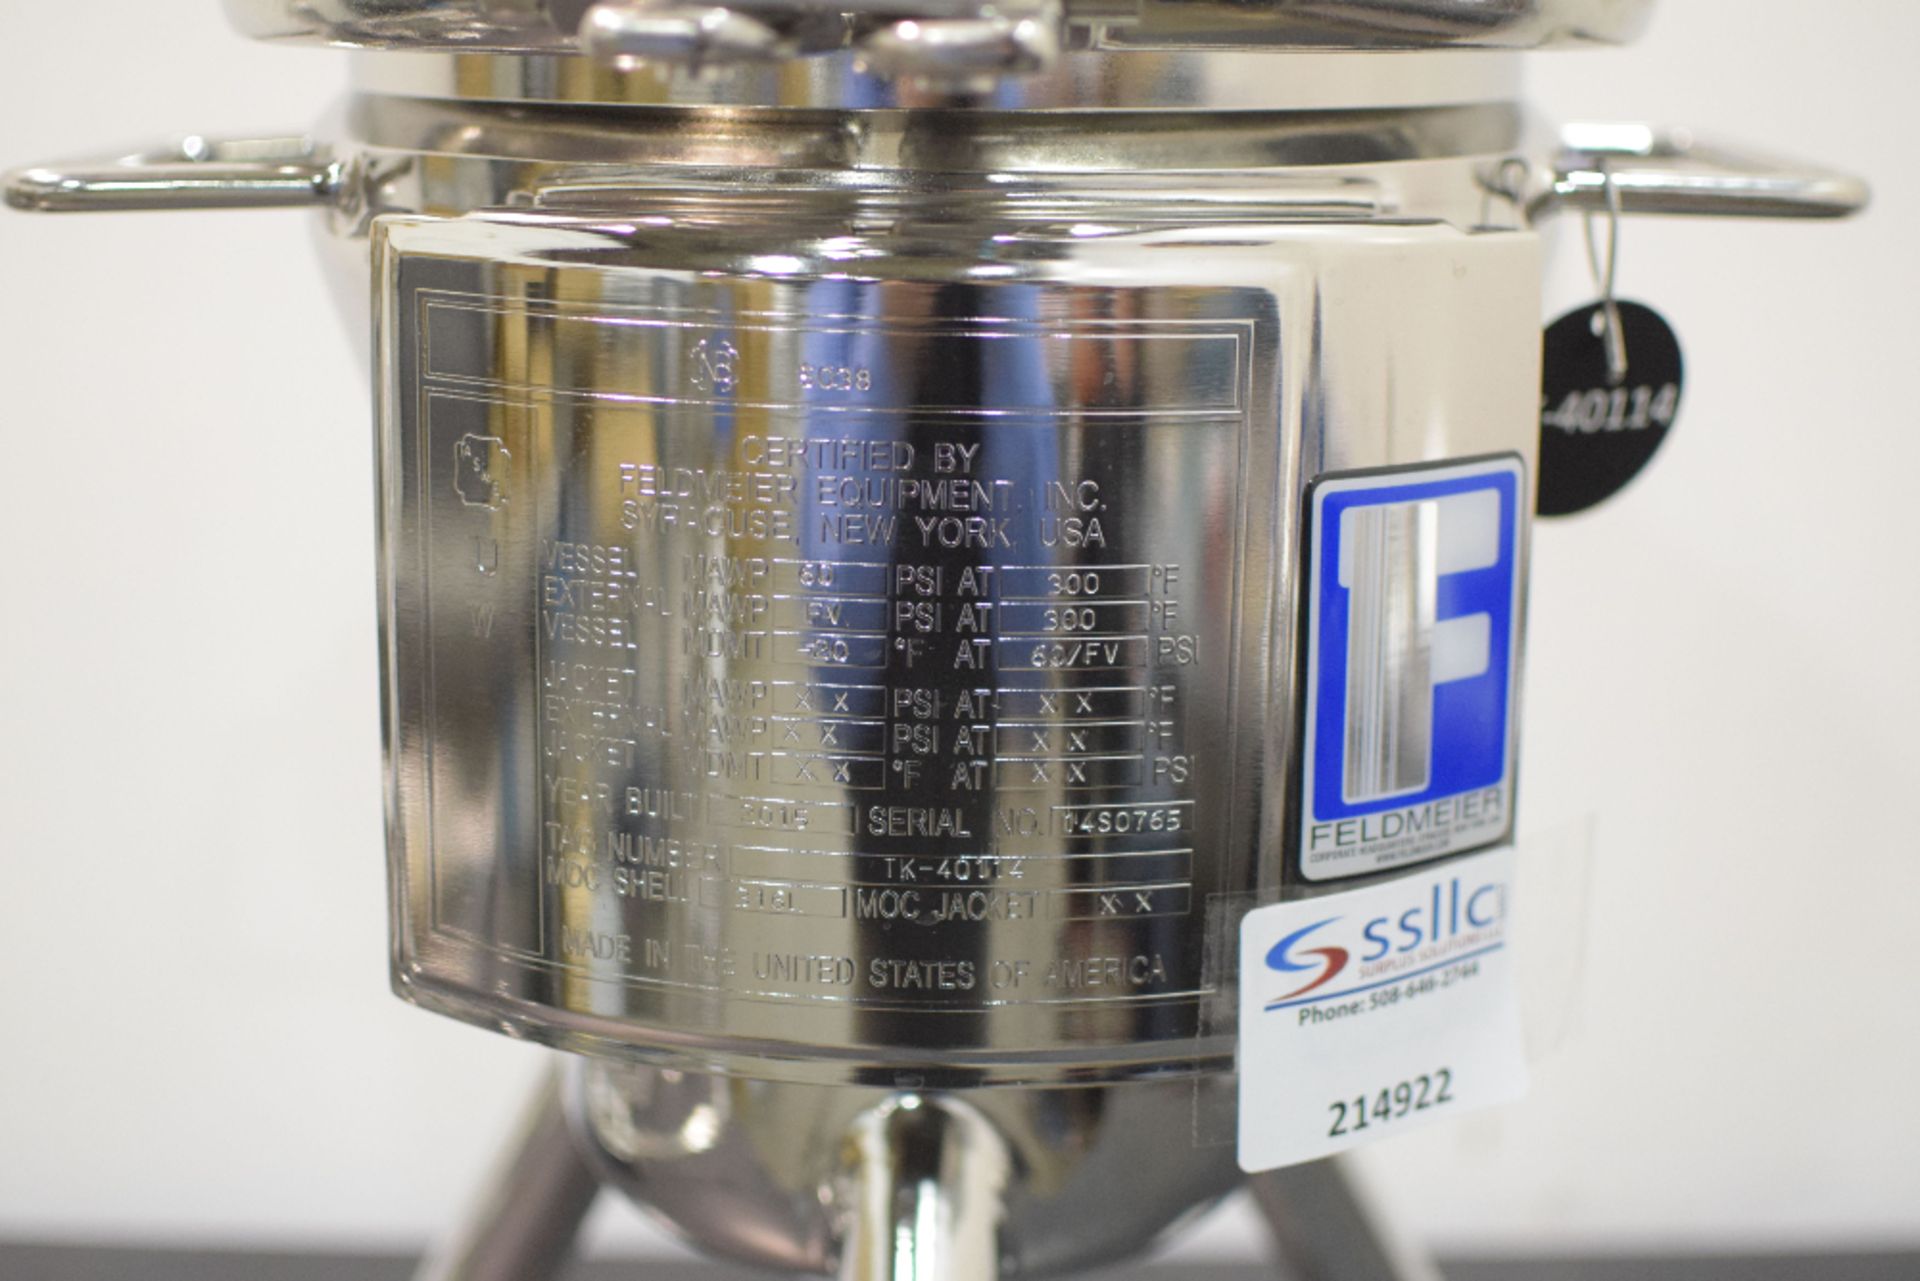 Feldmeier 5 liter Pressue Vessel - Image 4 of 5